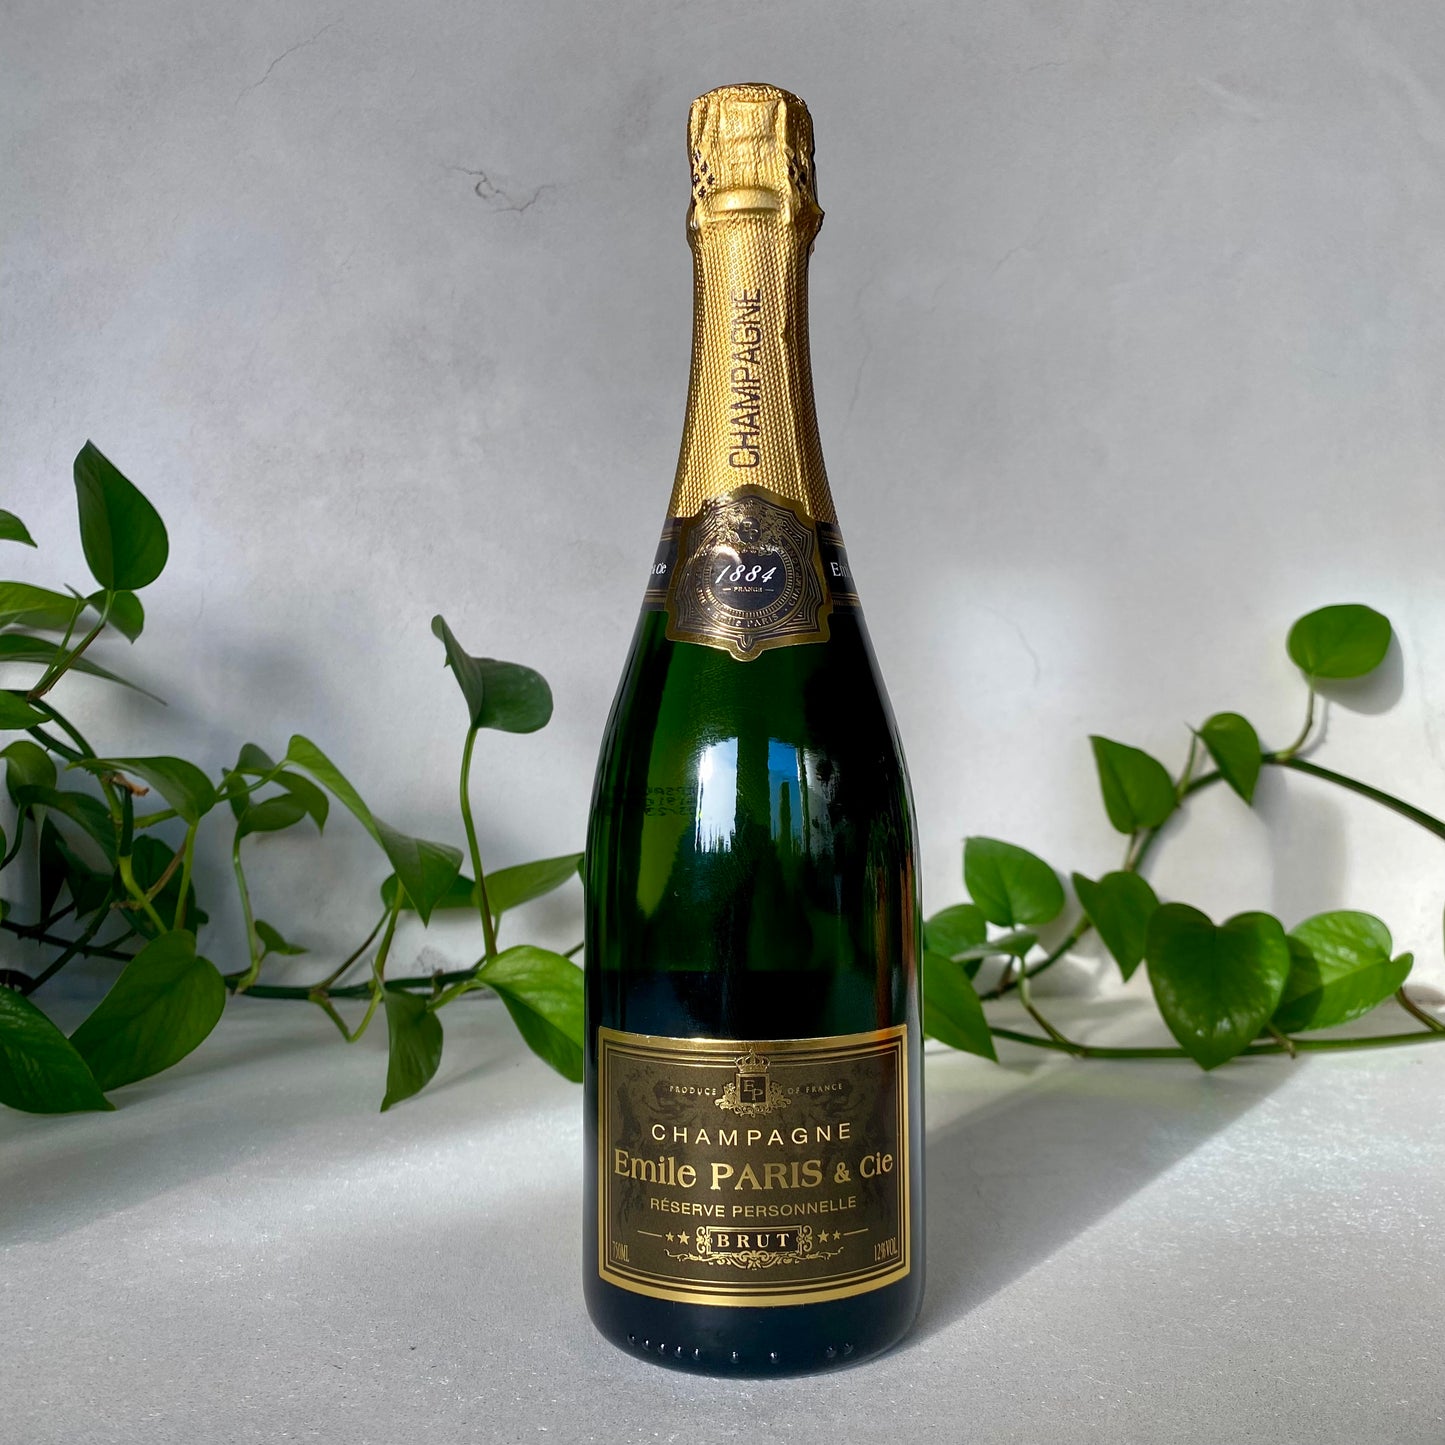 Emile Paris - Champagne - Champagne, France